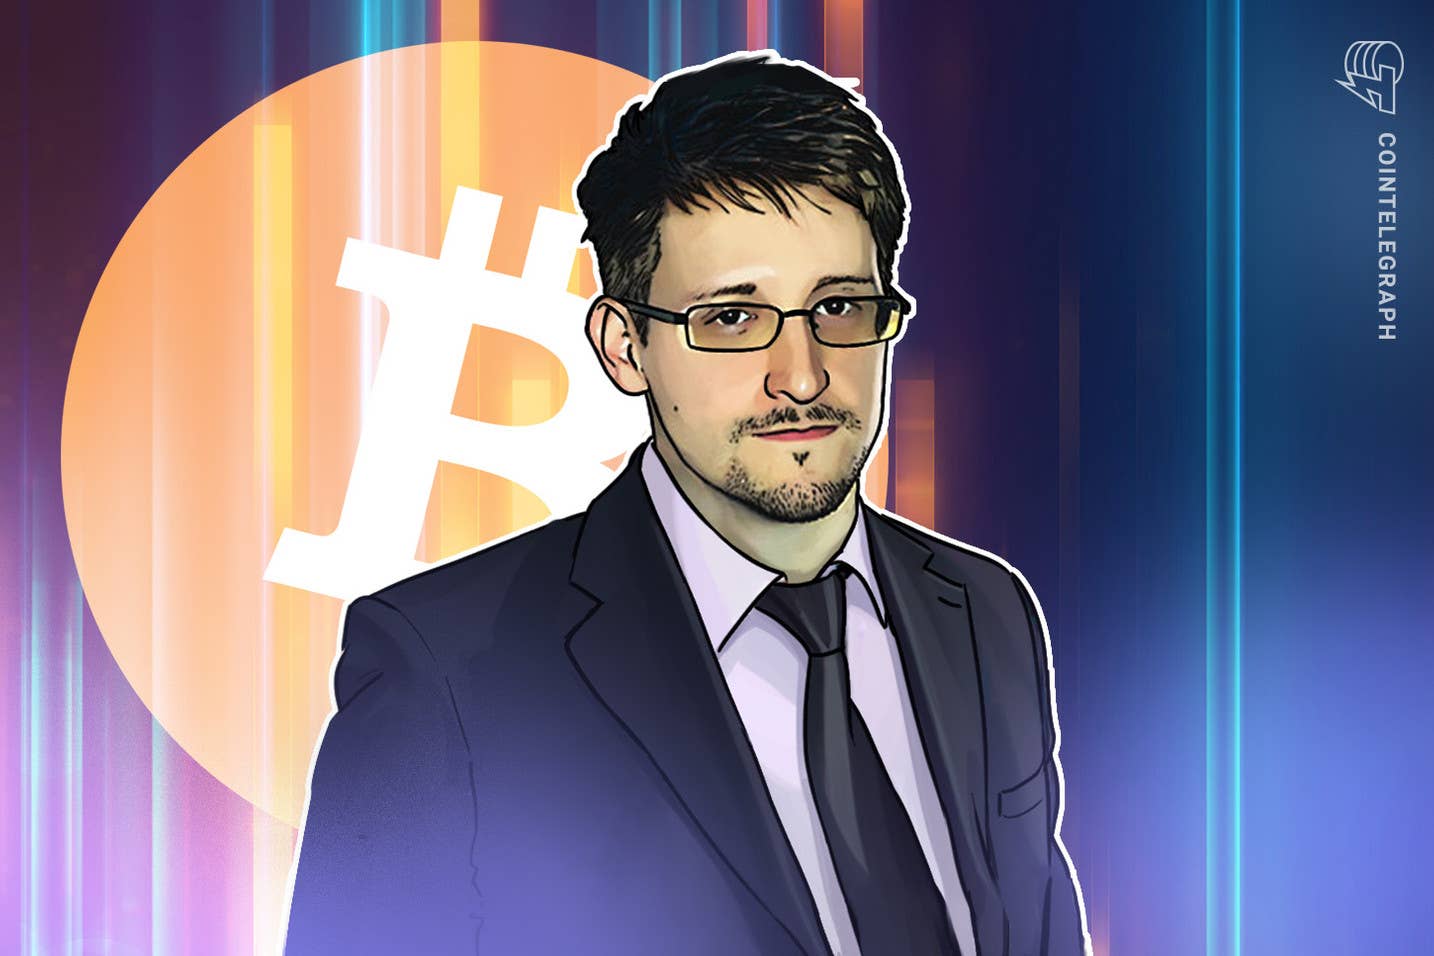 Bitcoin got stronger despite government crackdowns, says Edward Snowden